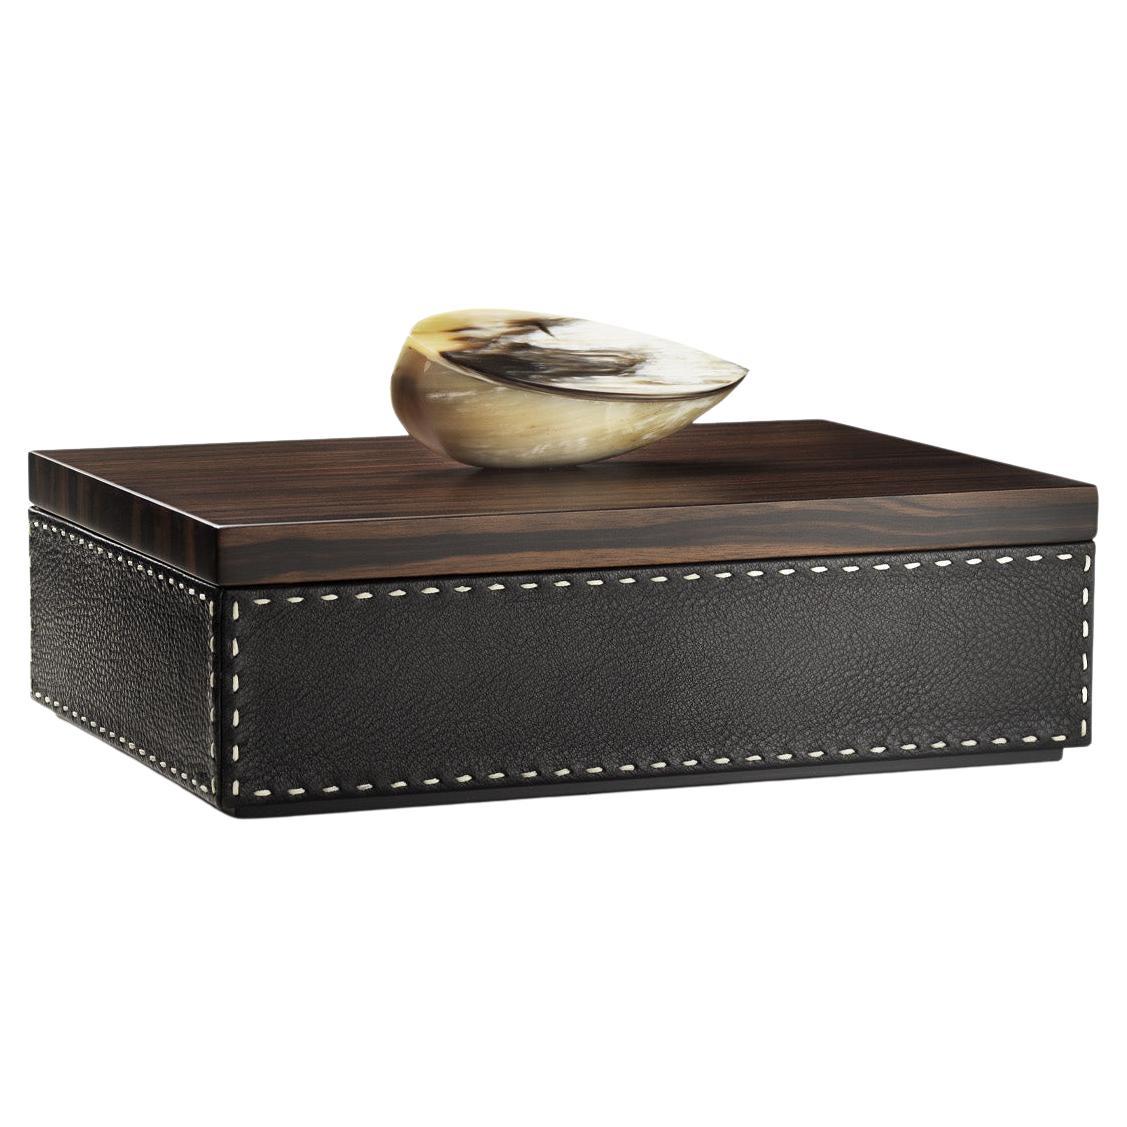 Capricia Box in Pebbled Leather with Handle in Corno Italiano, Mod. 4478 For Sale